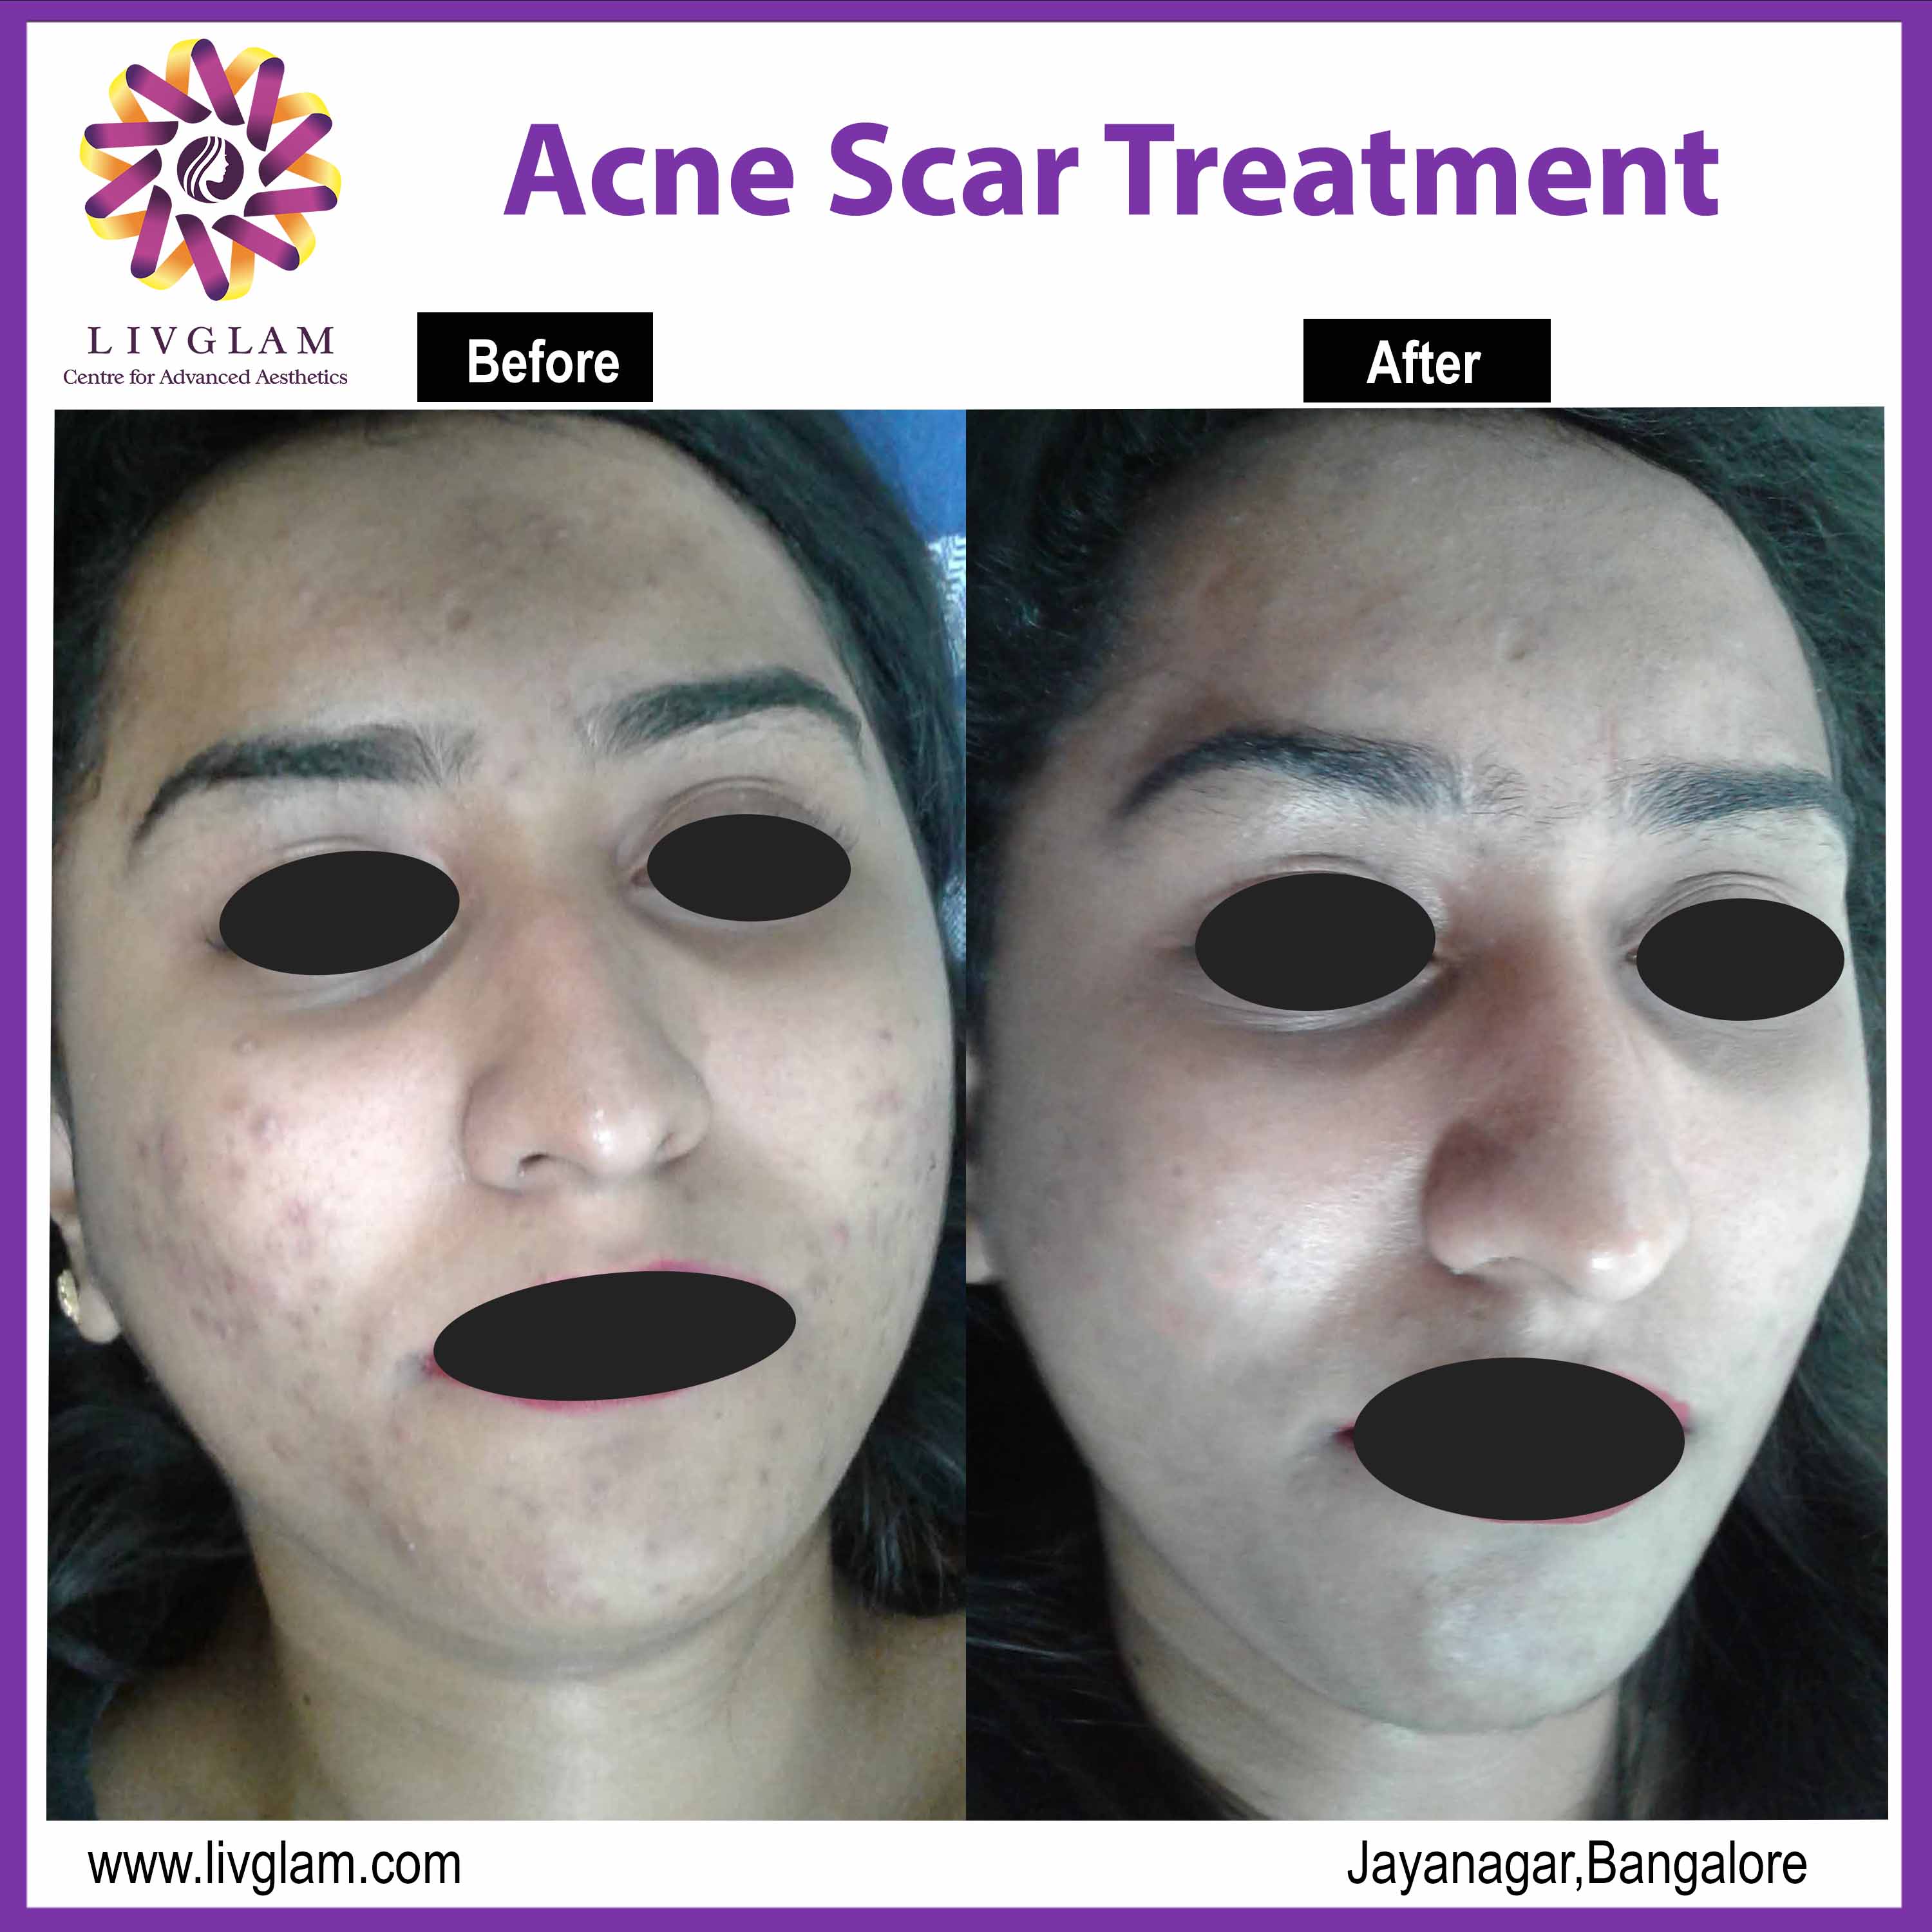 Acne scar treatment in Bangalore